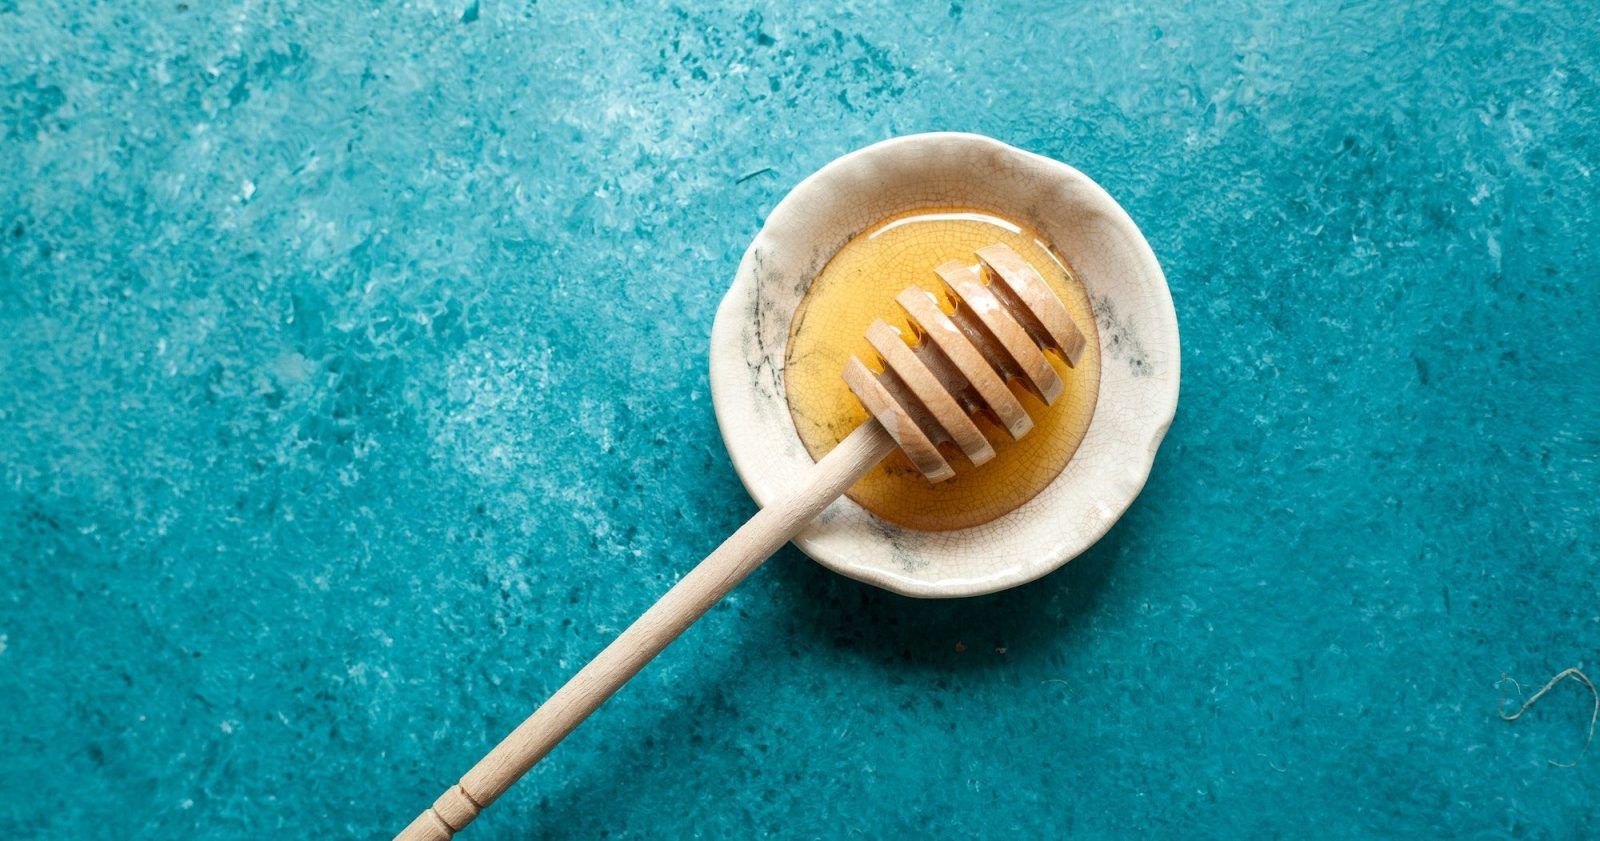 5 biggest health benefits of honey, according to experts